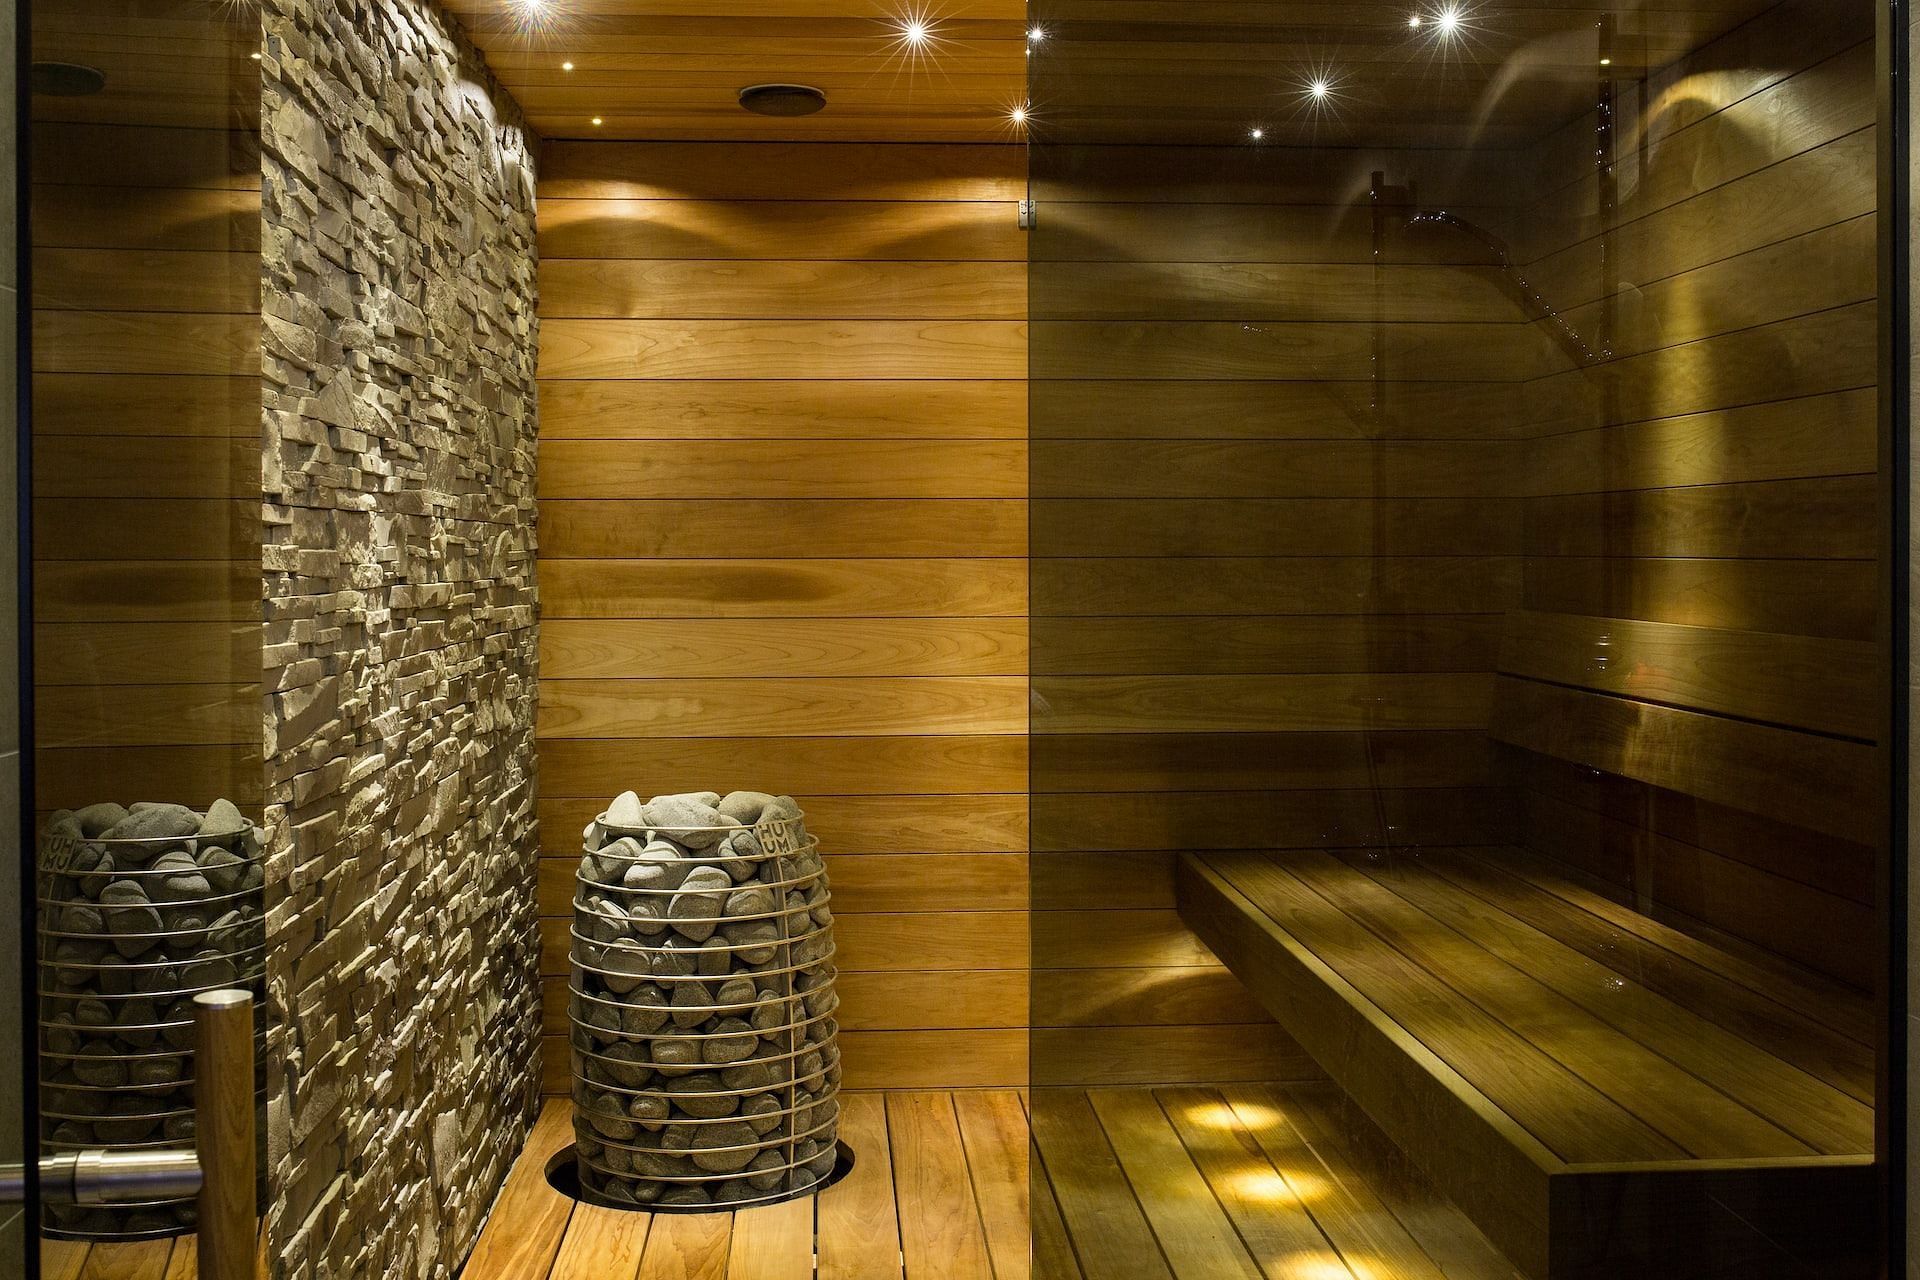 sauna before or after workouts (Photo via HUUM/Unsplash)